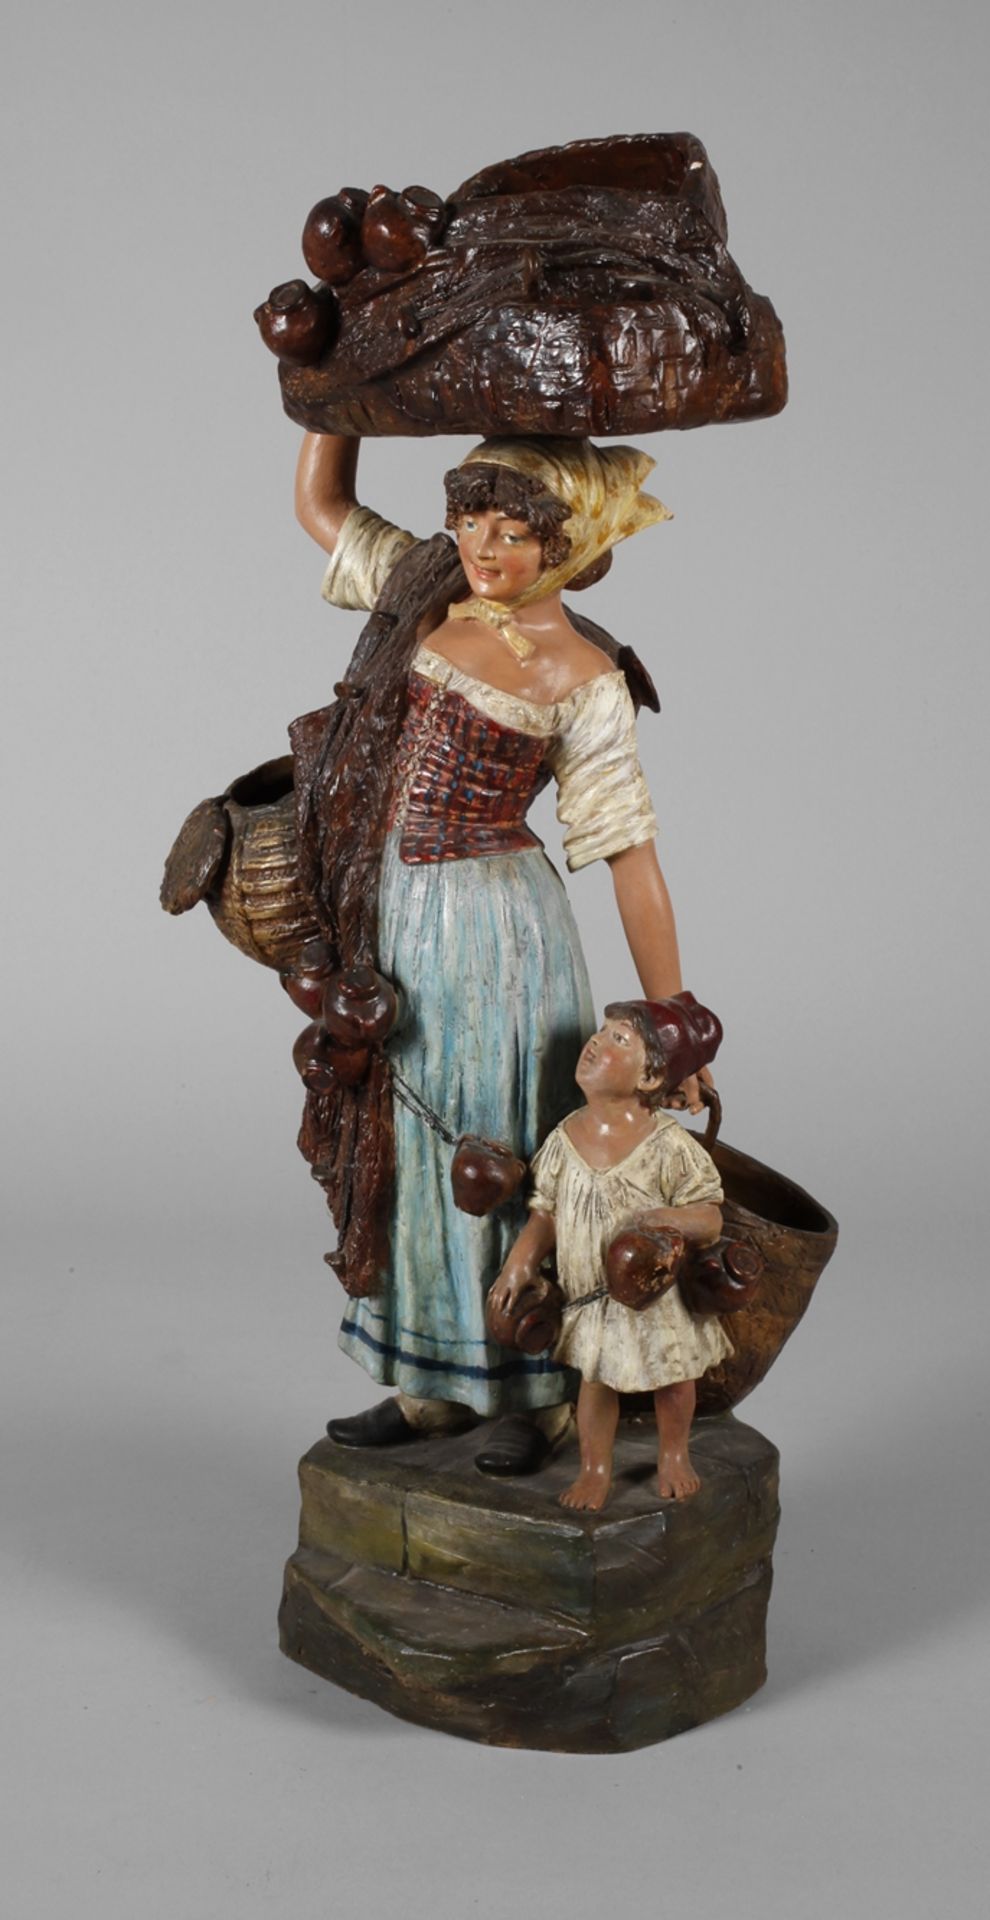 Neapolitan market woman with child